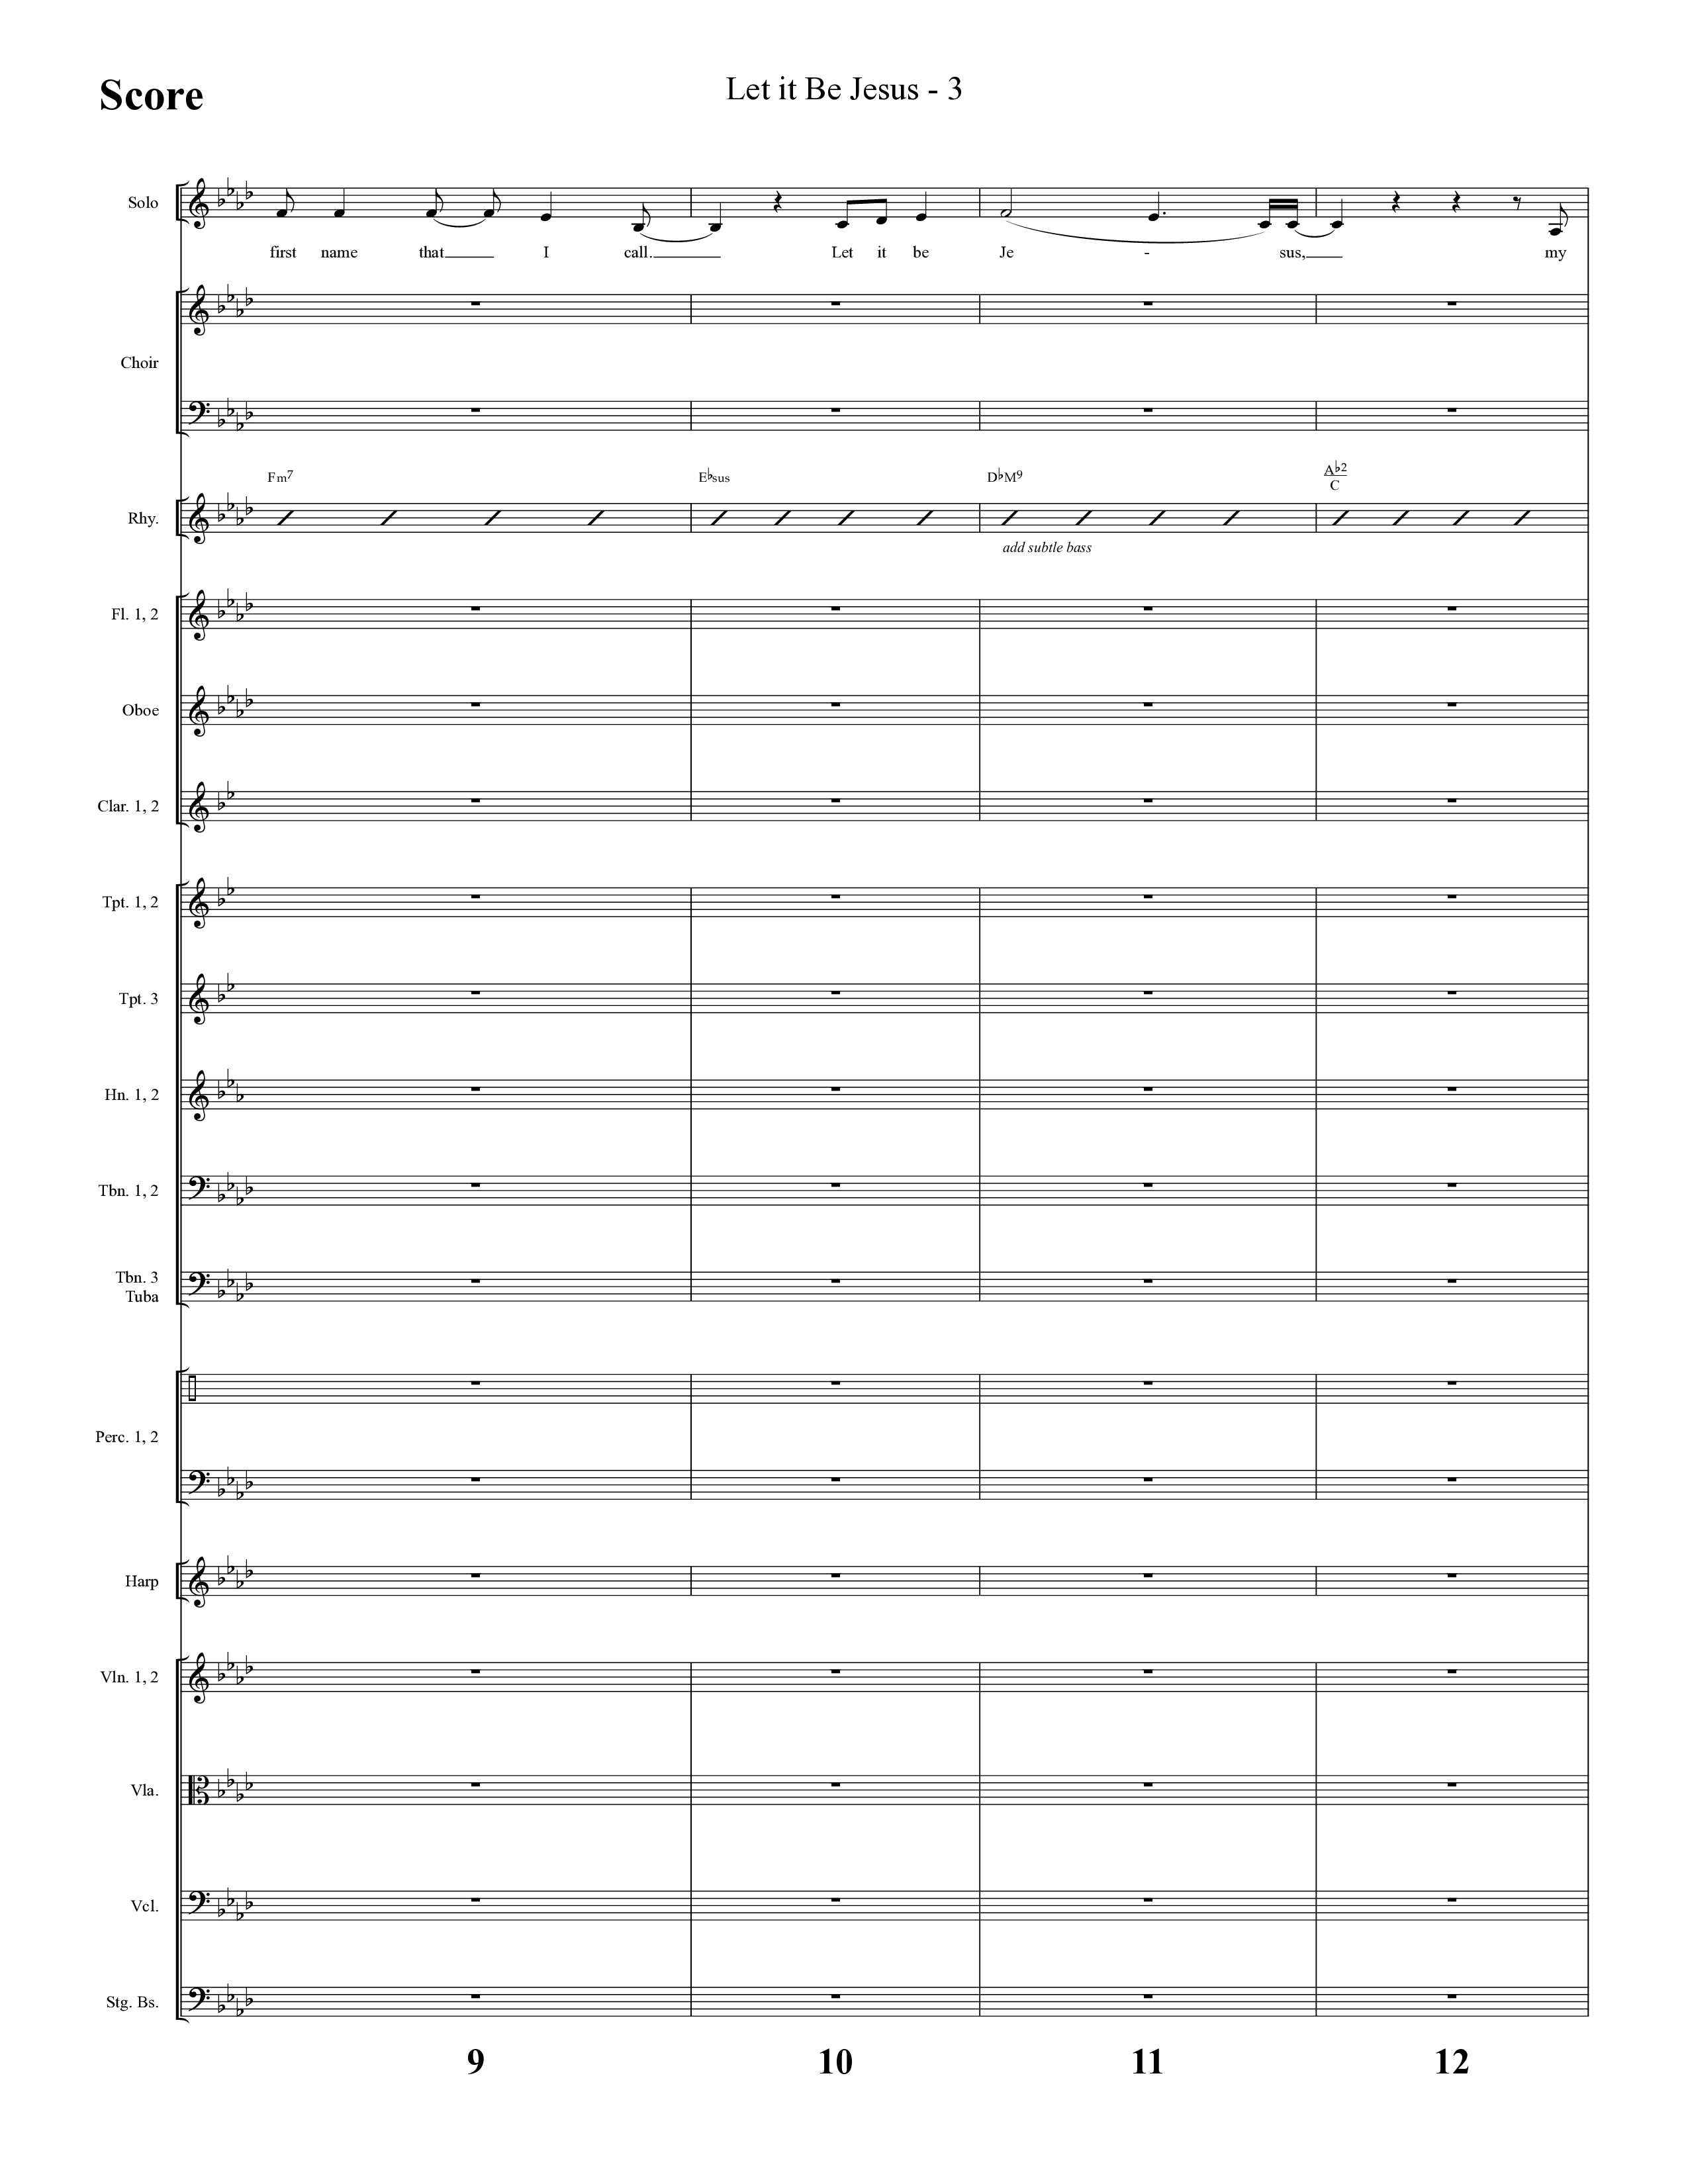 Let It Be Jesus (Choral Anthem SATB) Conductor's Score (Lifeway Choral / Arr. Cliff Duren)